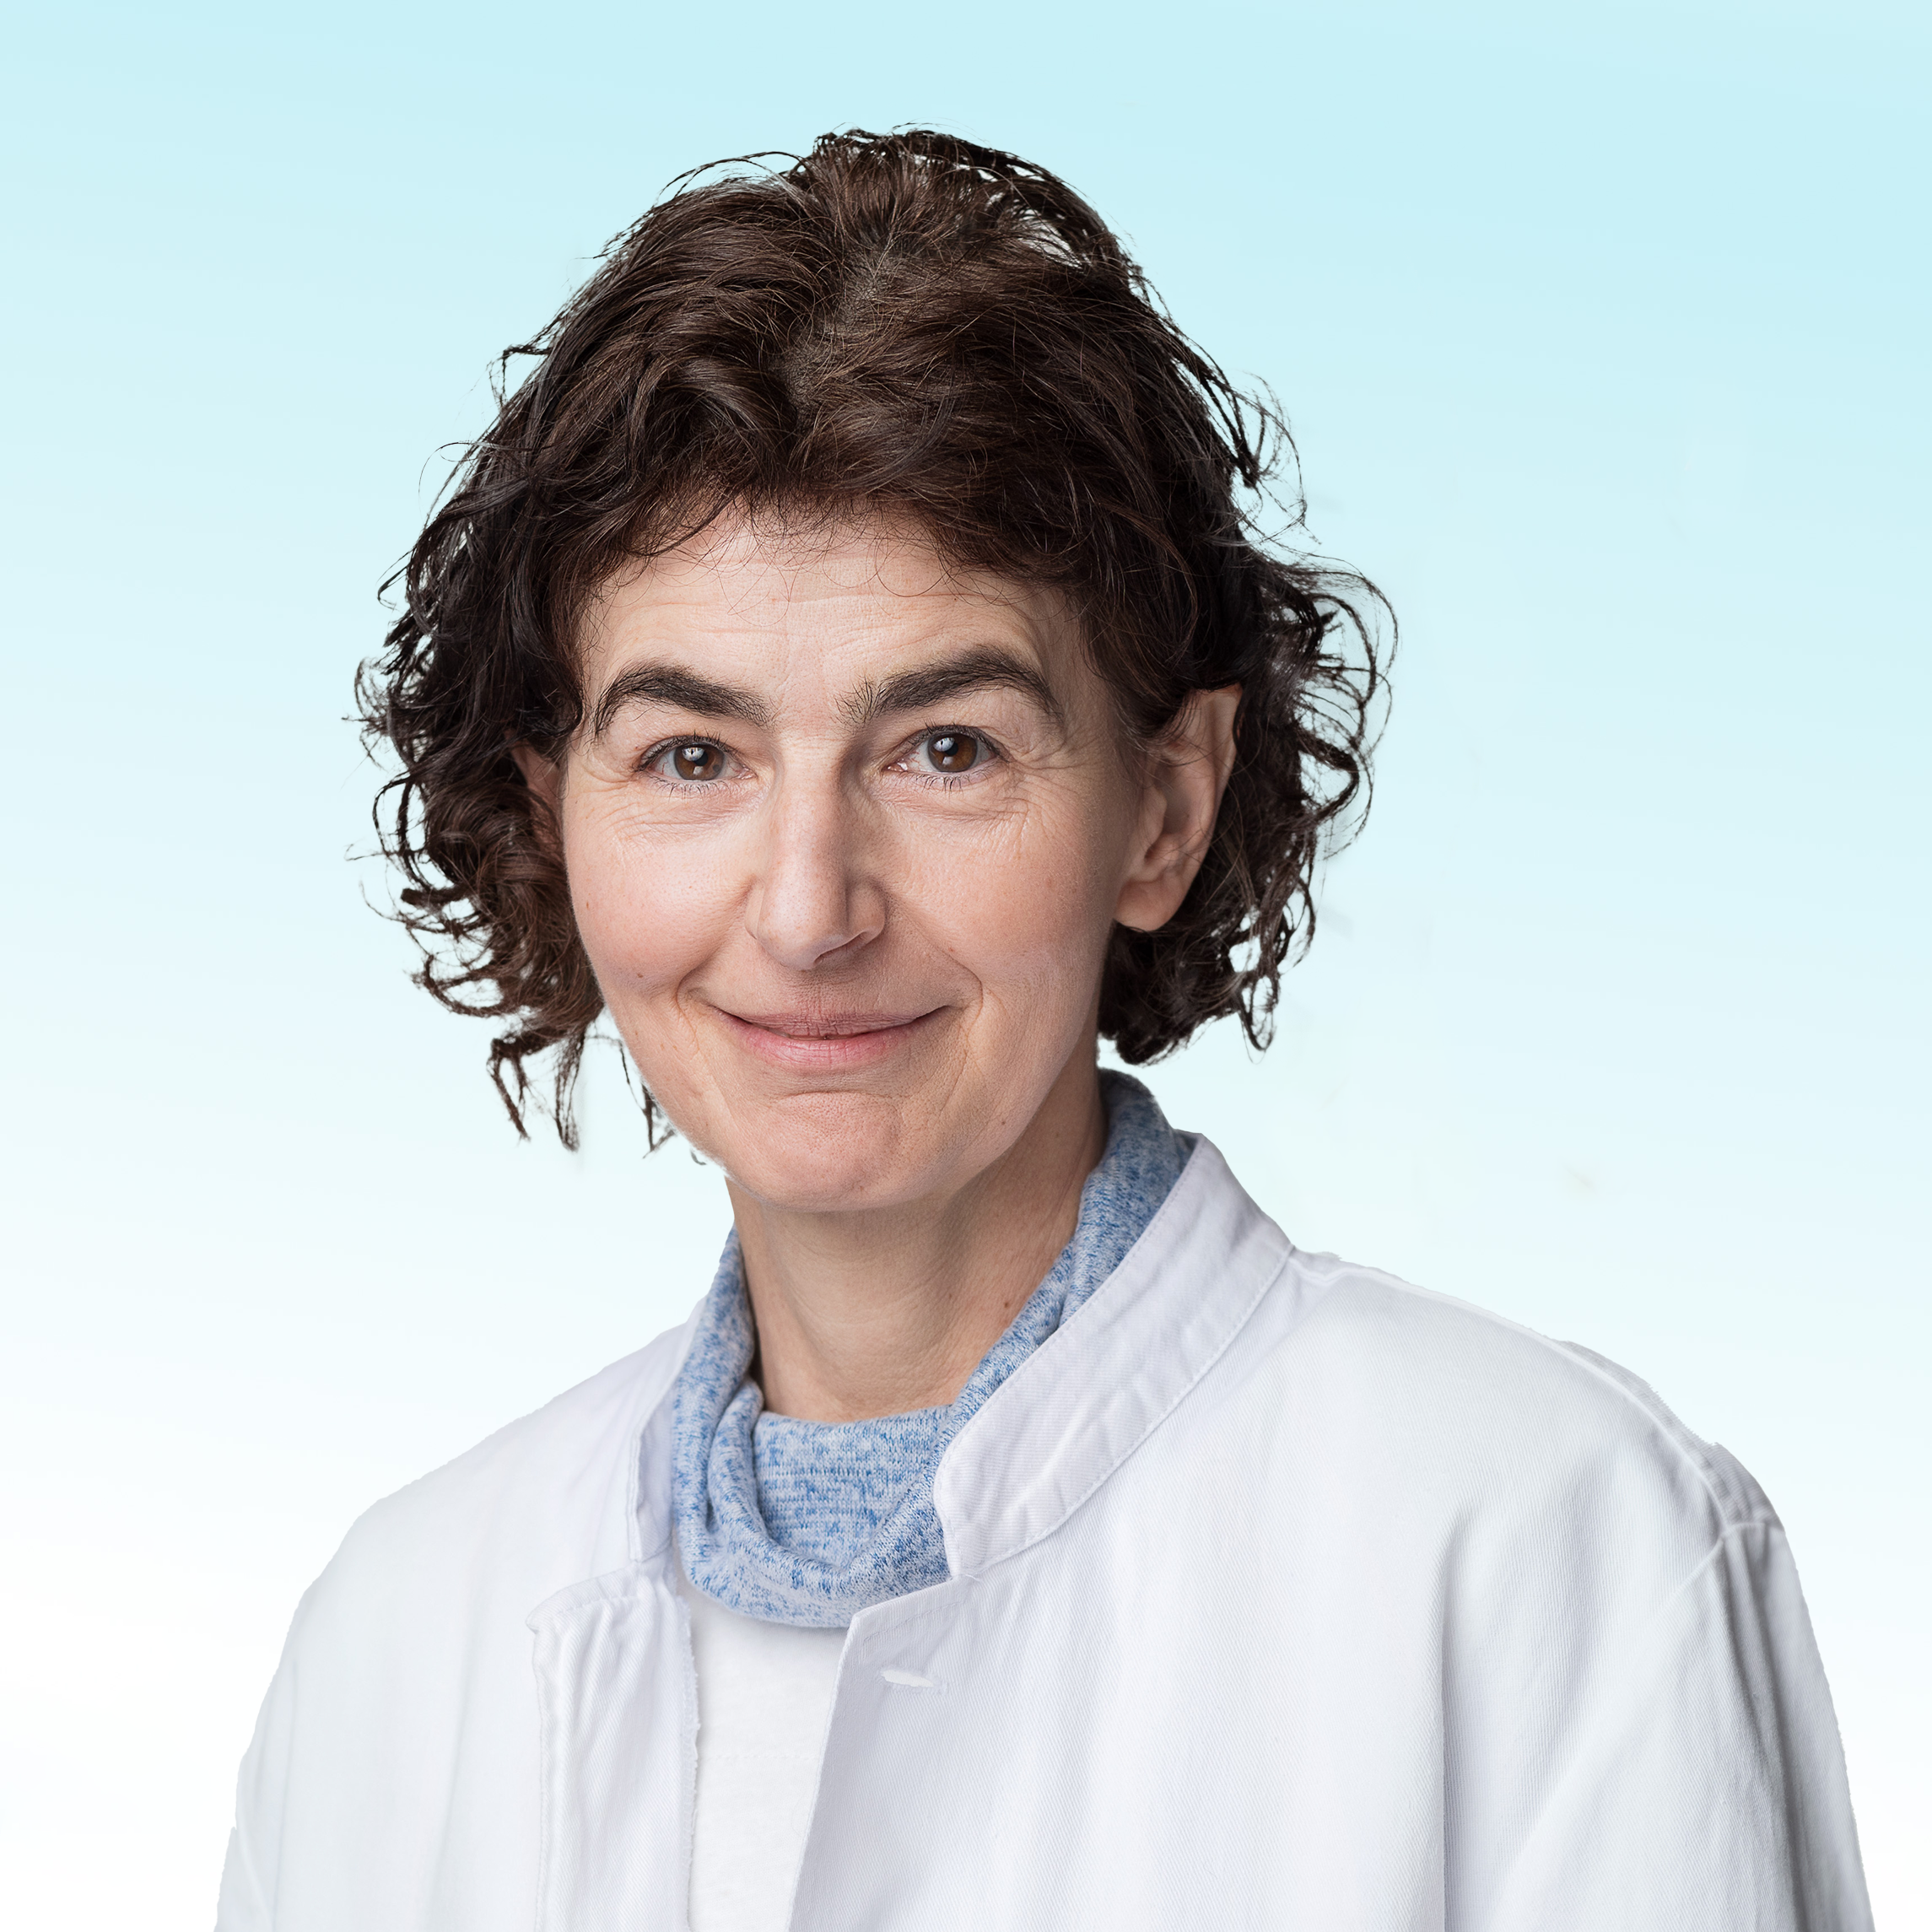 Dermatologist, Dr. med. Stephanie Tanza